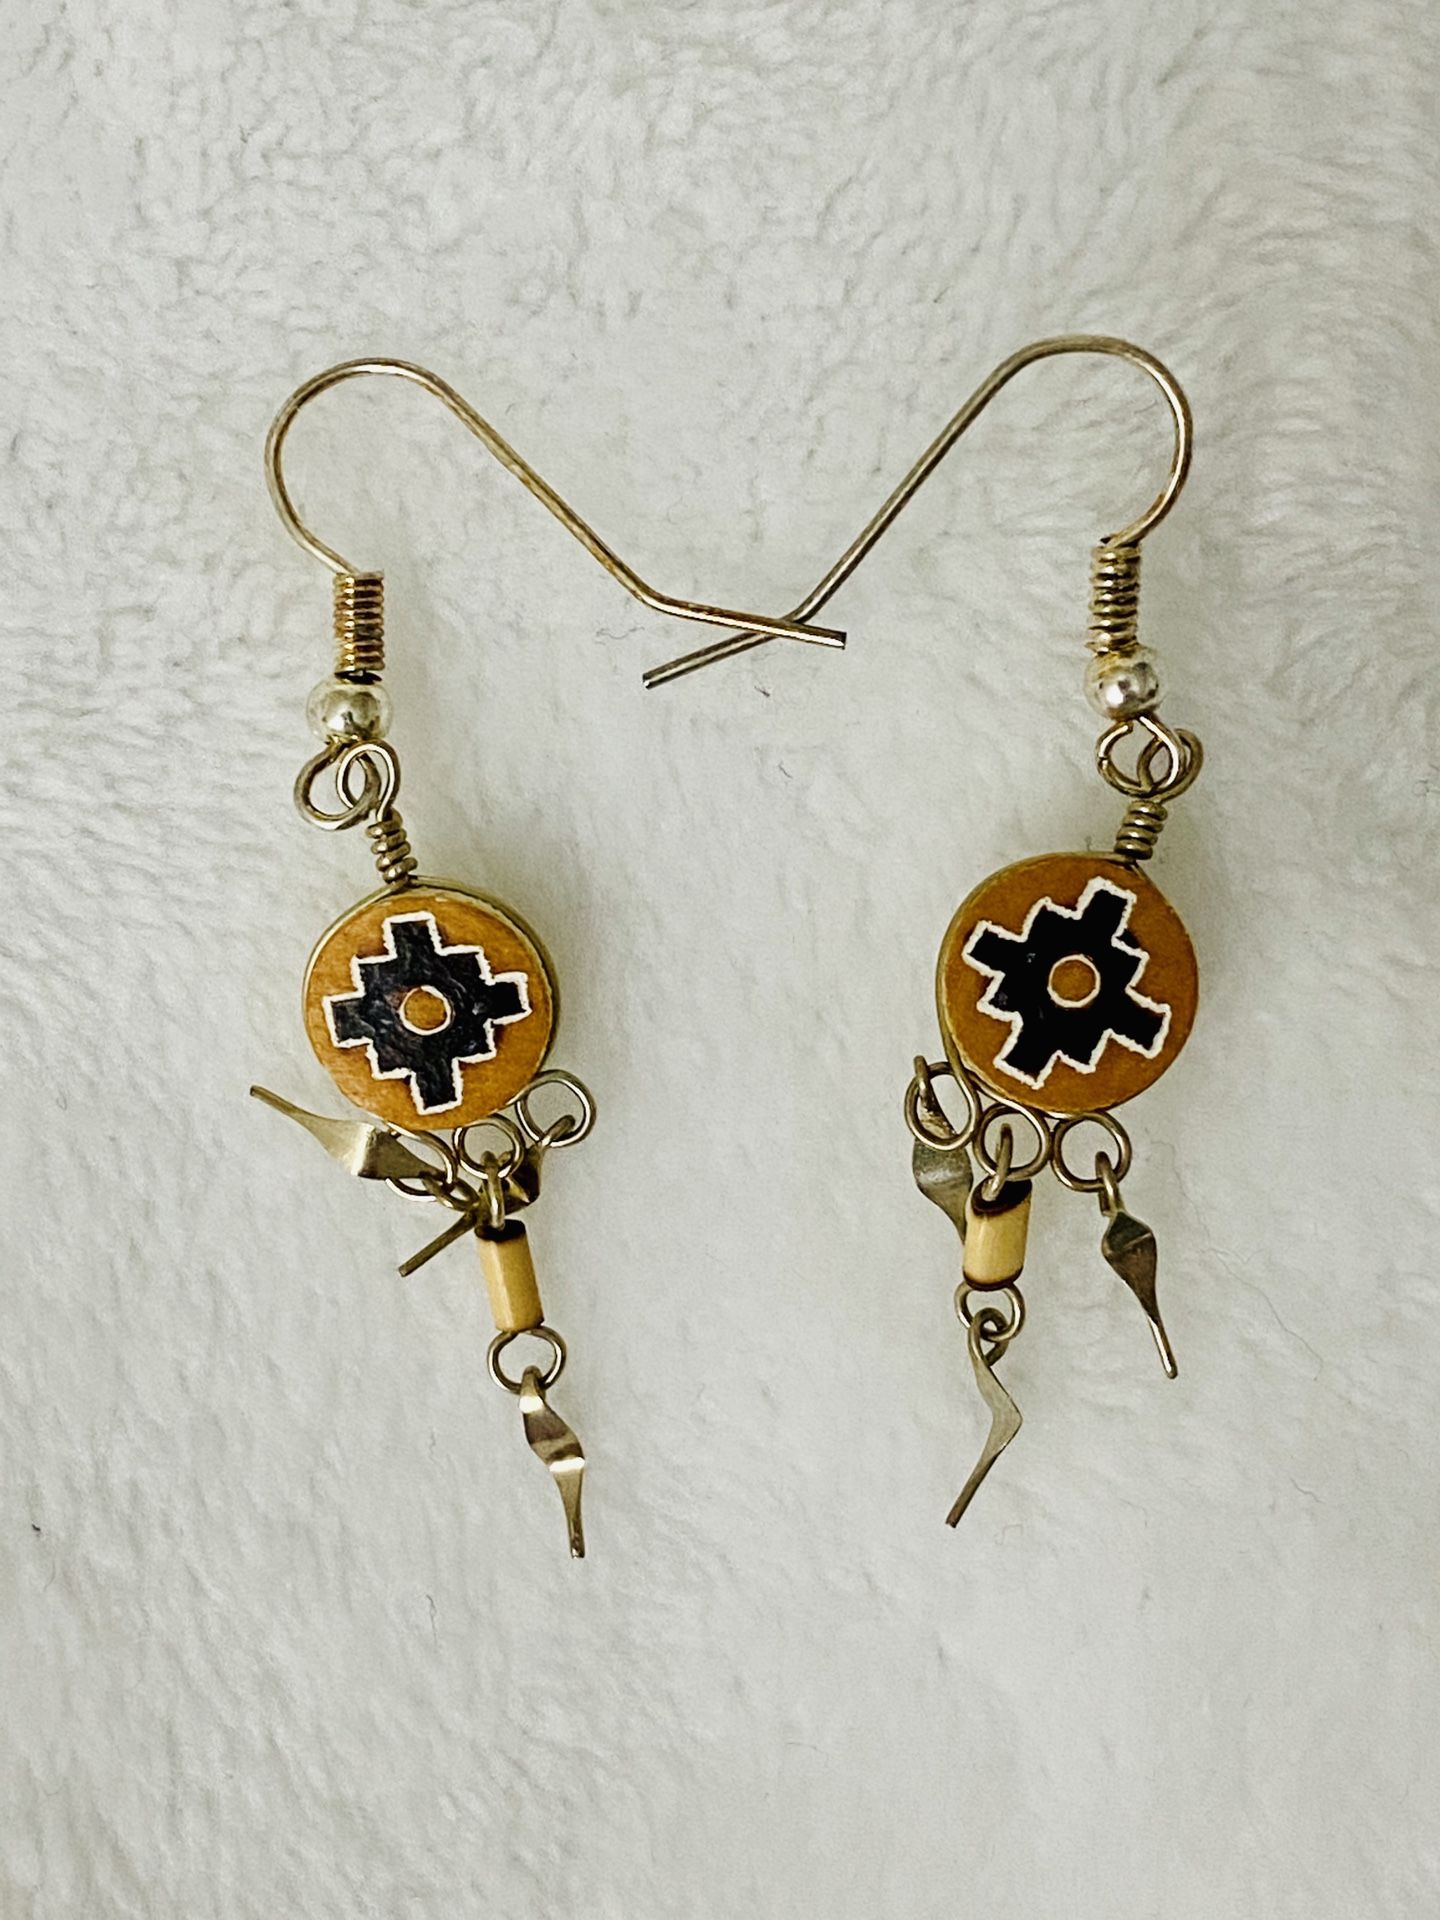 Peruvian earrings